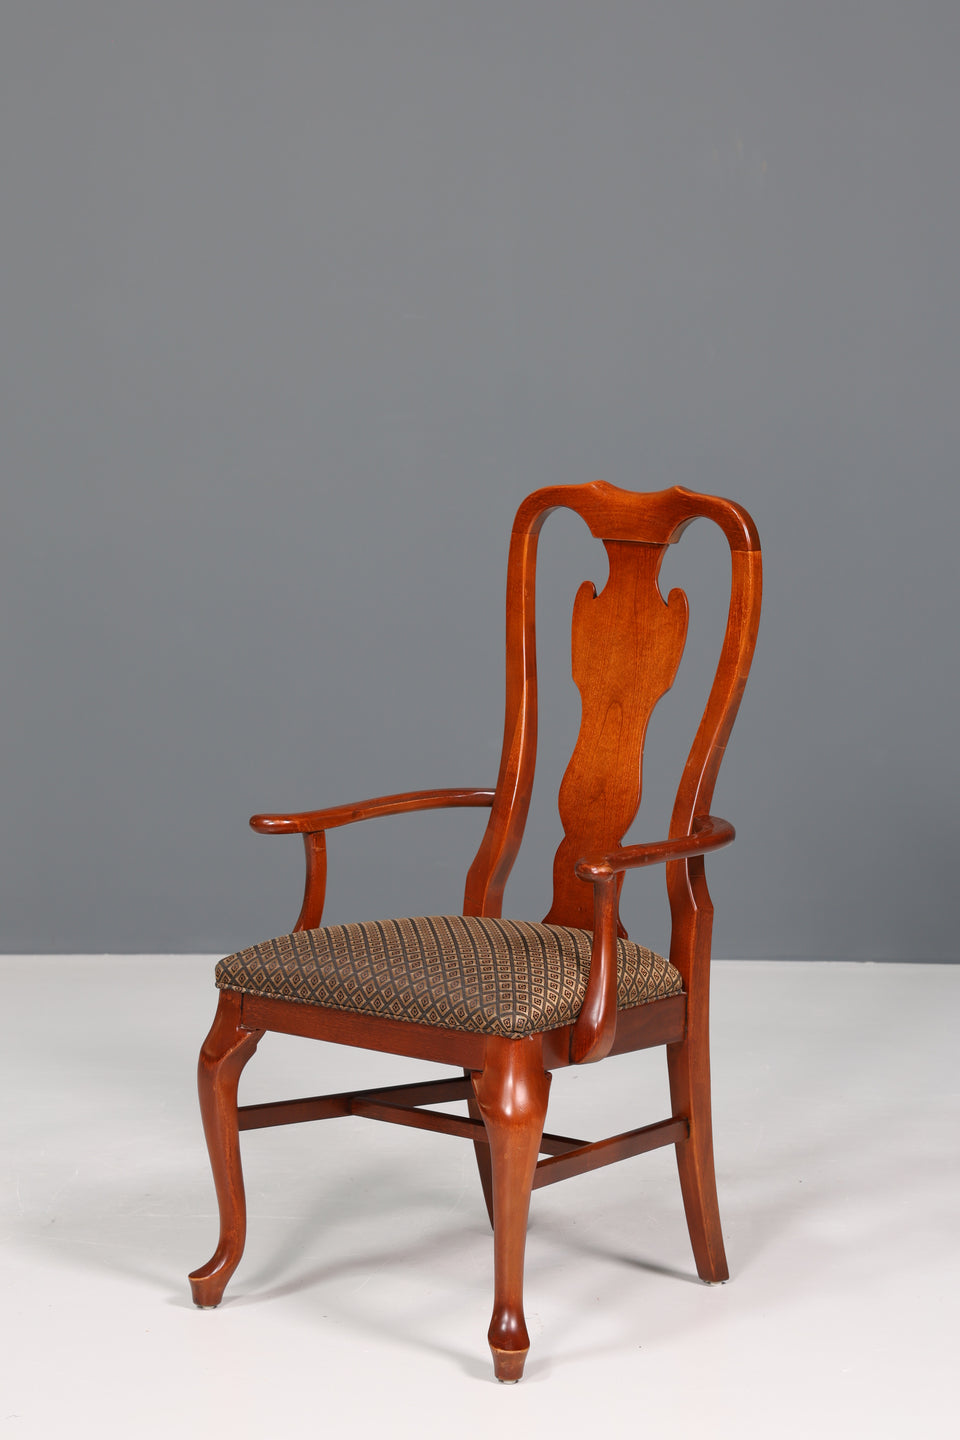 Original Drexel Heritage Stuhl Chippendale Armlehnstuhl USA Sekretär Schreibtisch Stuhl